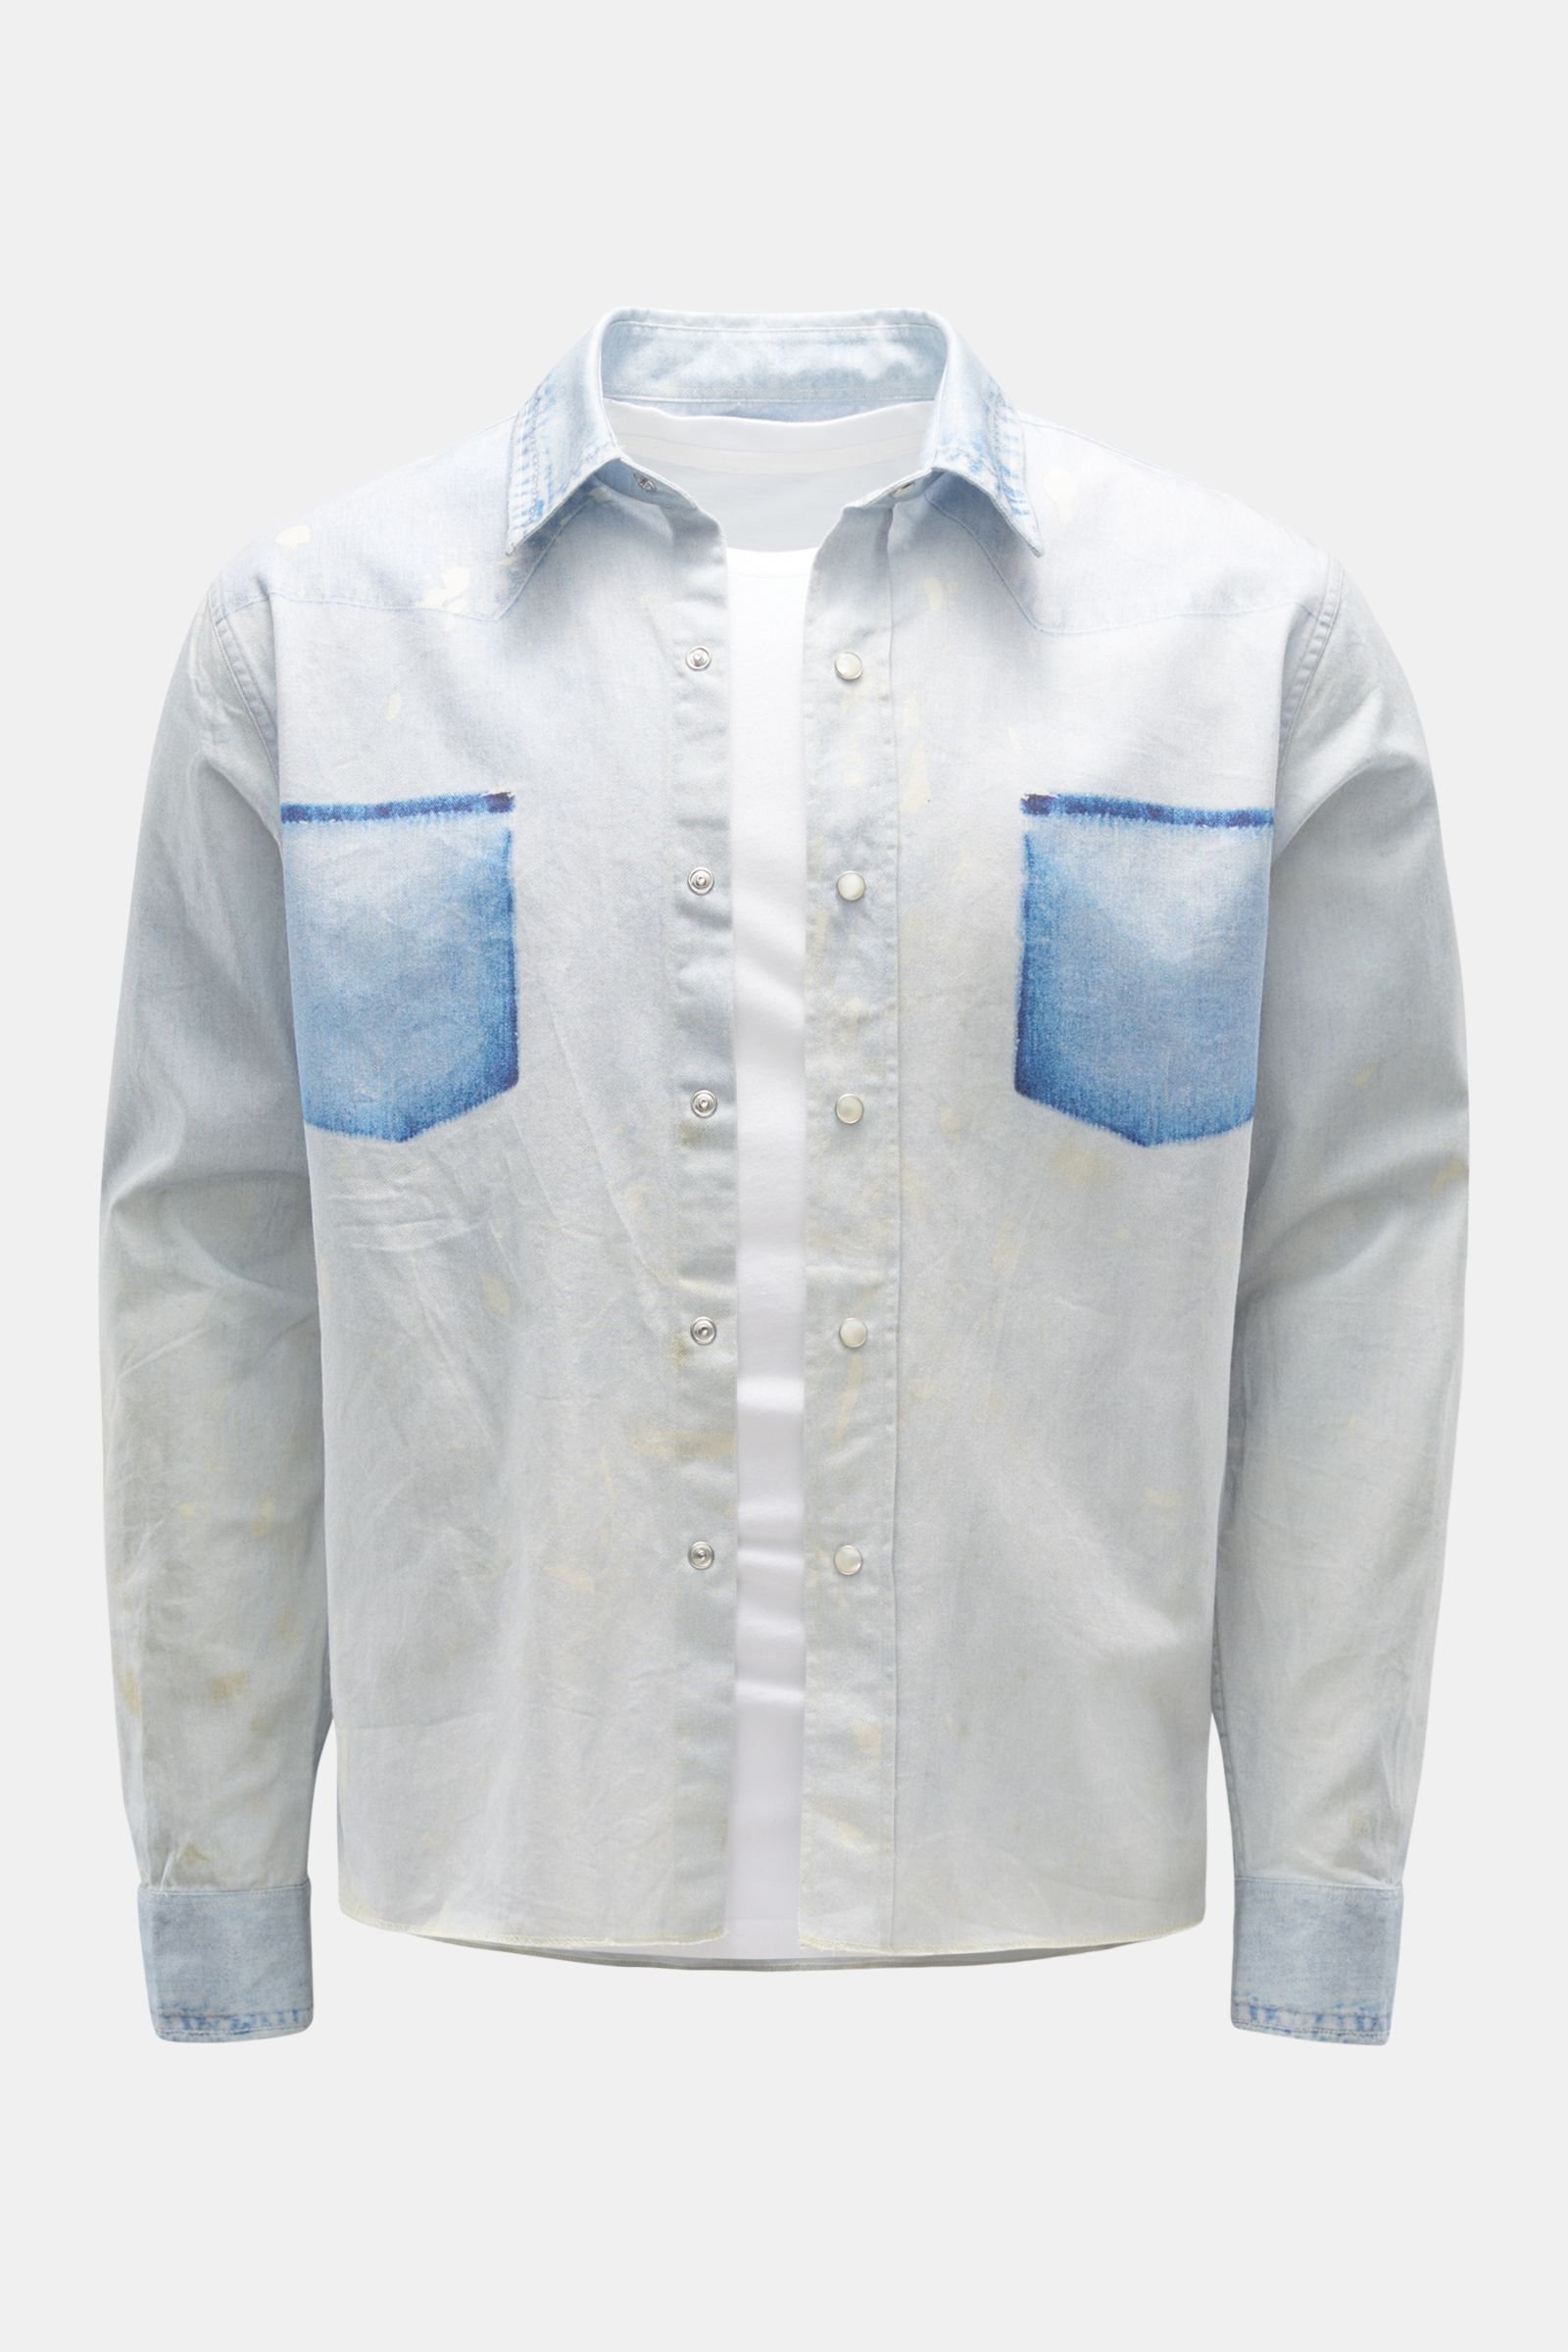 Overshirt 'Western Shirt' pastel blue patterned